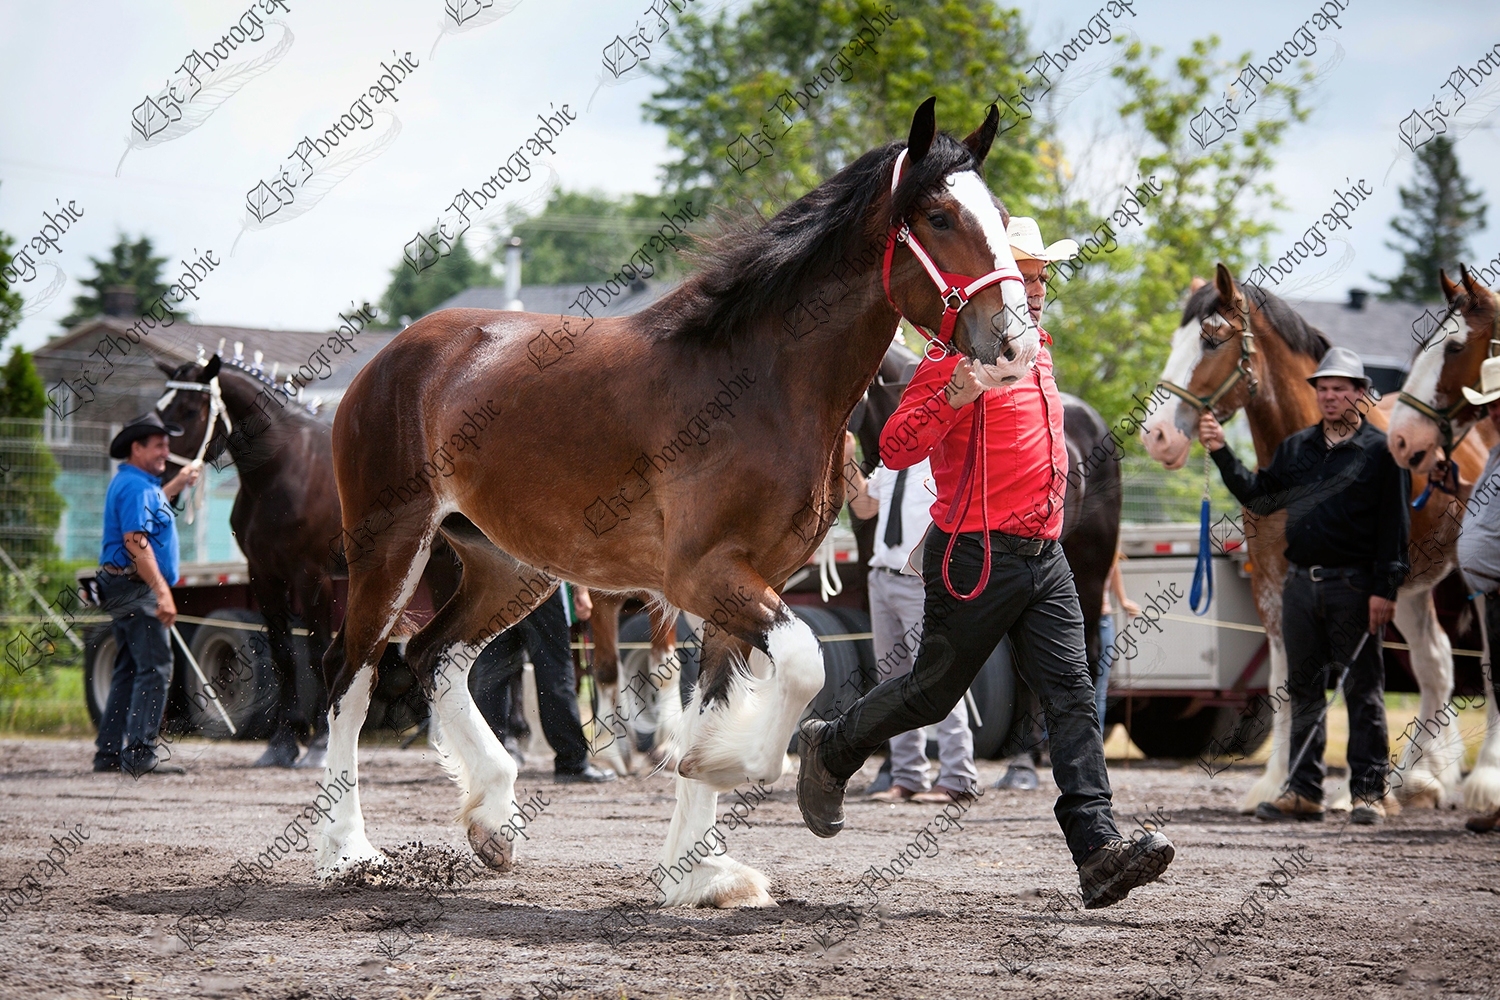 elze_photo_6740_jogging_presentation_cheval_brun_shire_horse_presented_judge